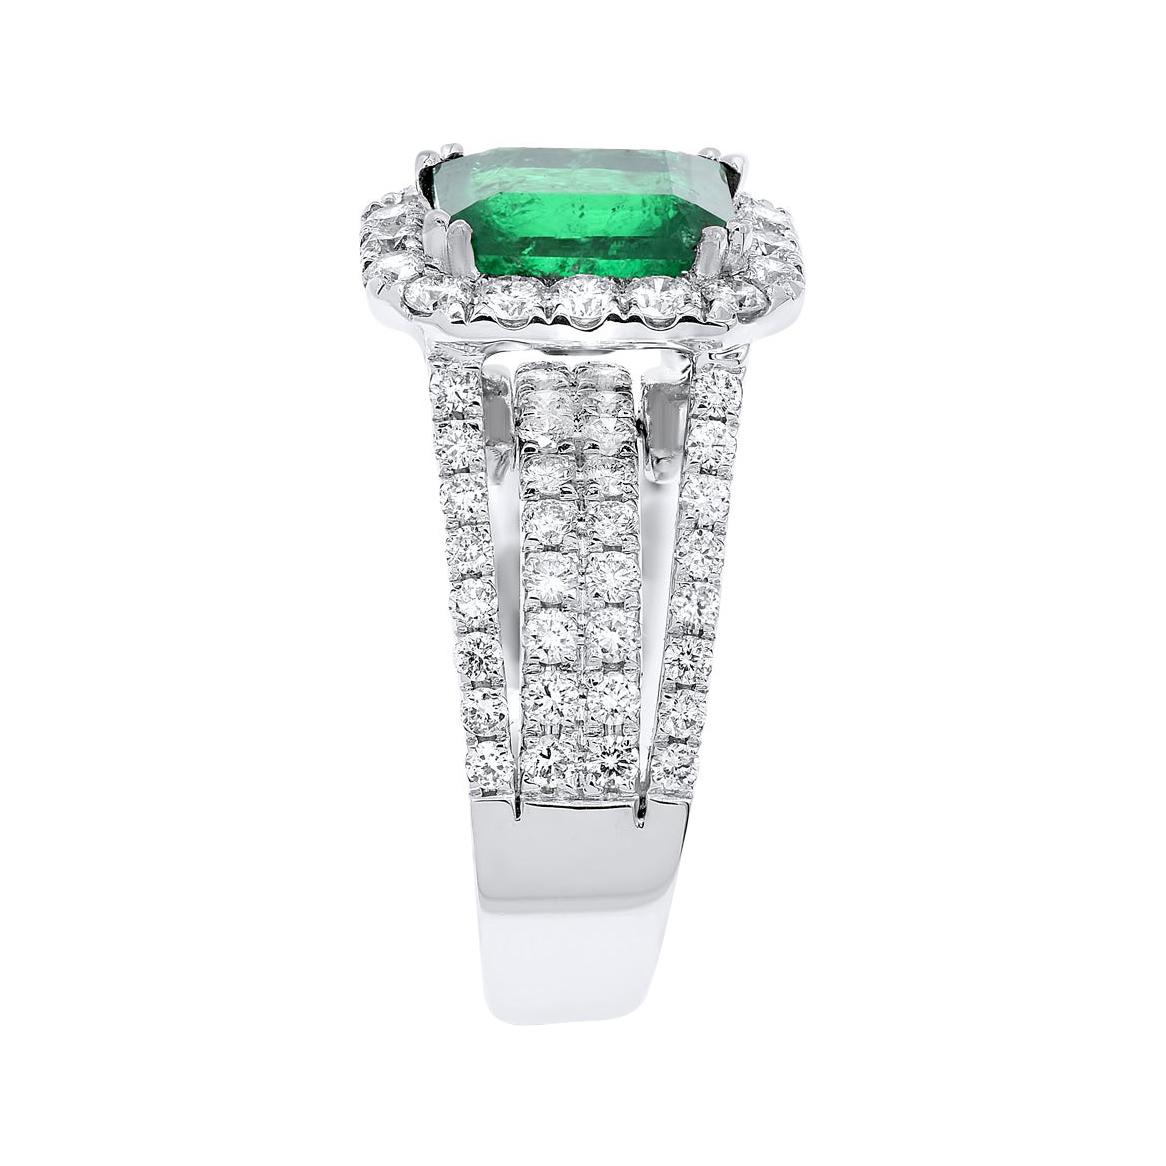 18k wg ring, diamond 1.69ct, emerald 3.01ct 8.78gm, 102st
